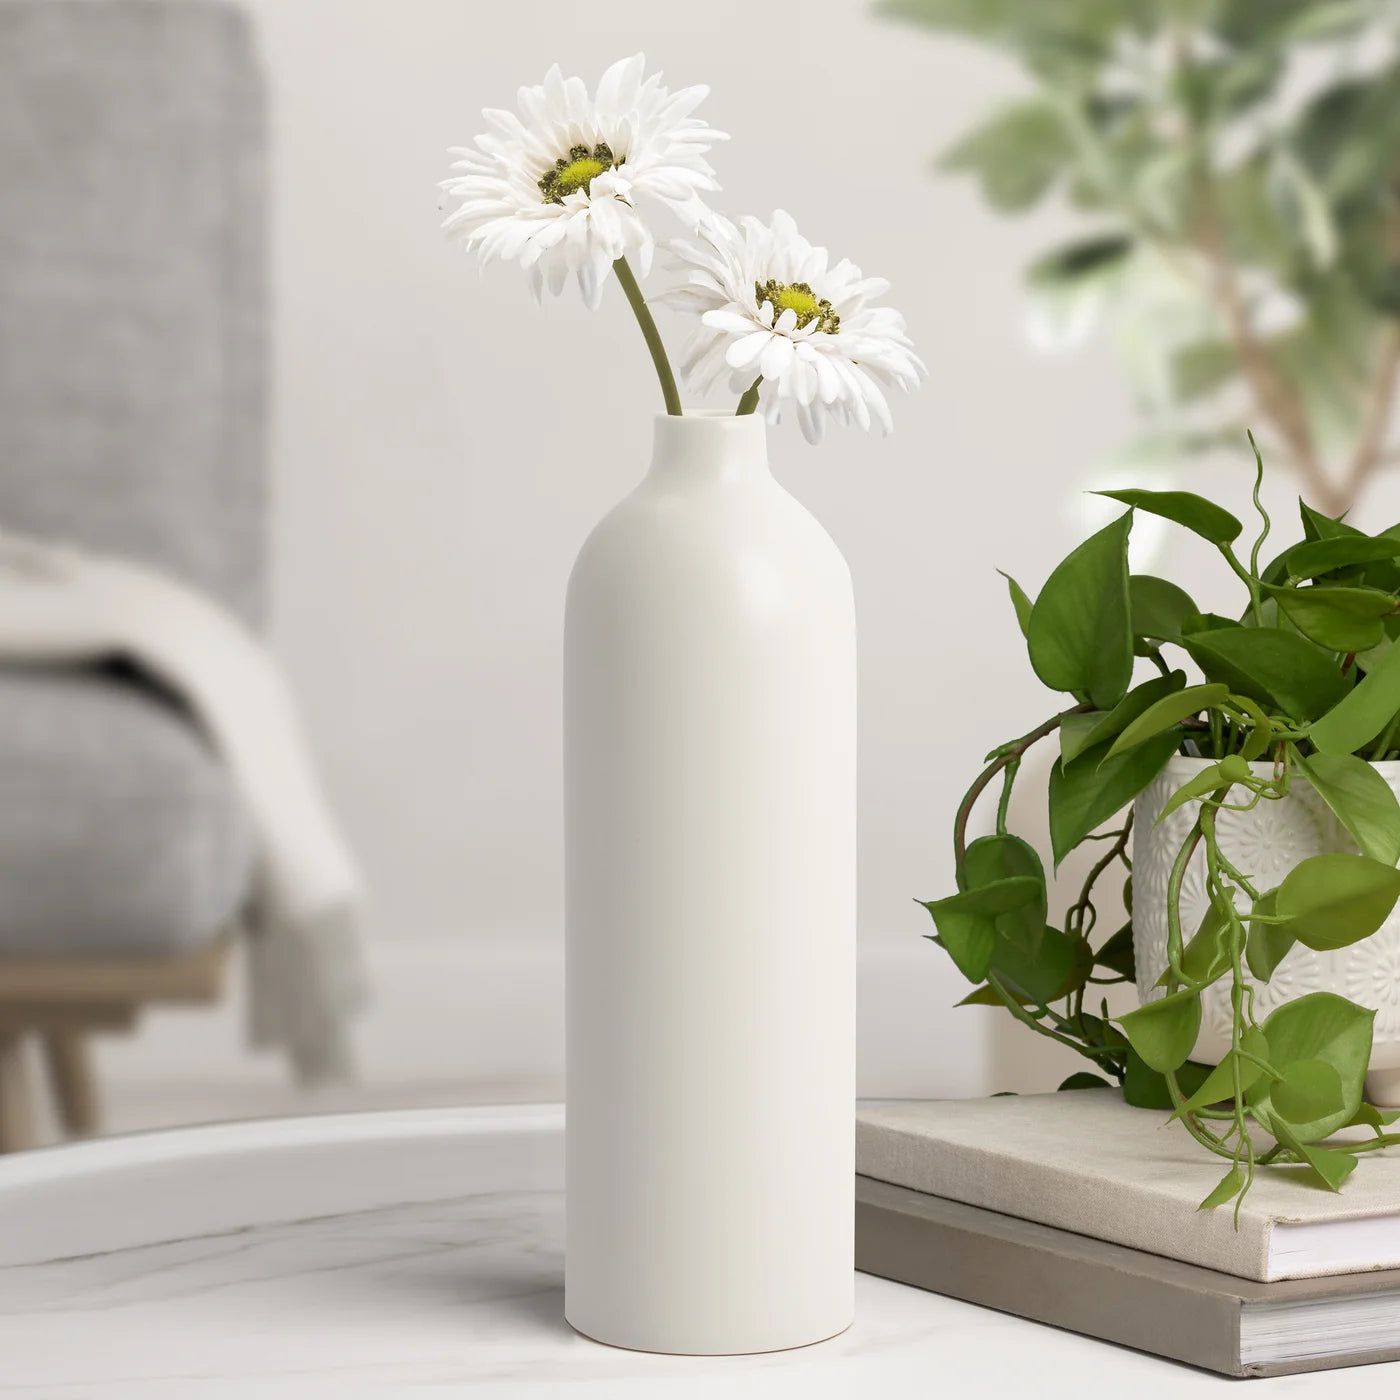 Komi 11h" Ceramic Bottle Vase - White